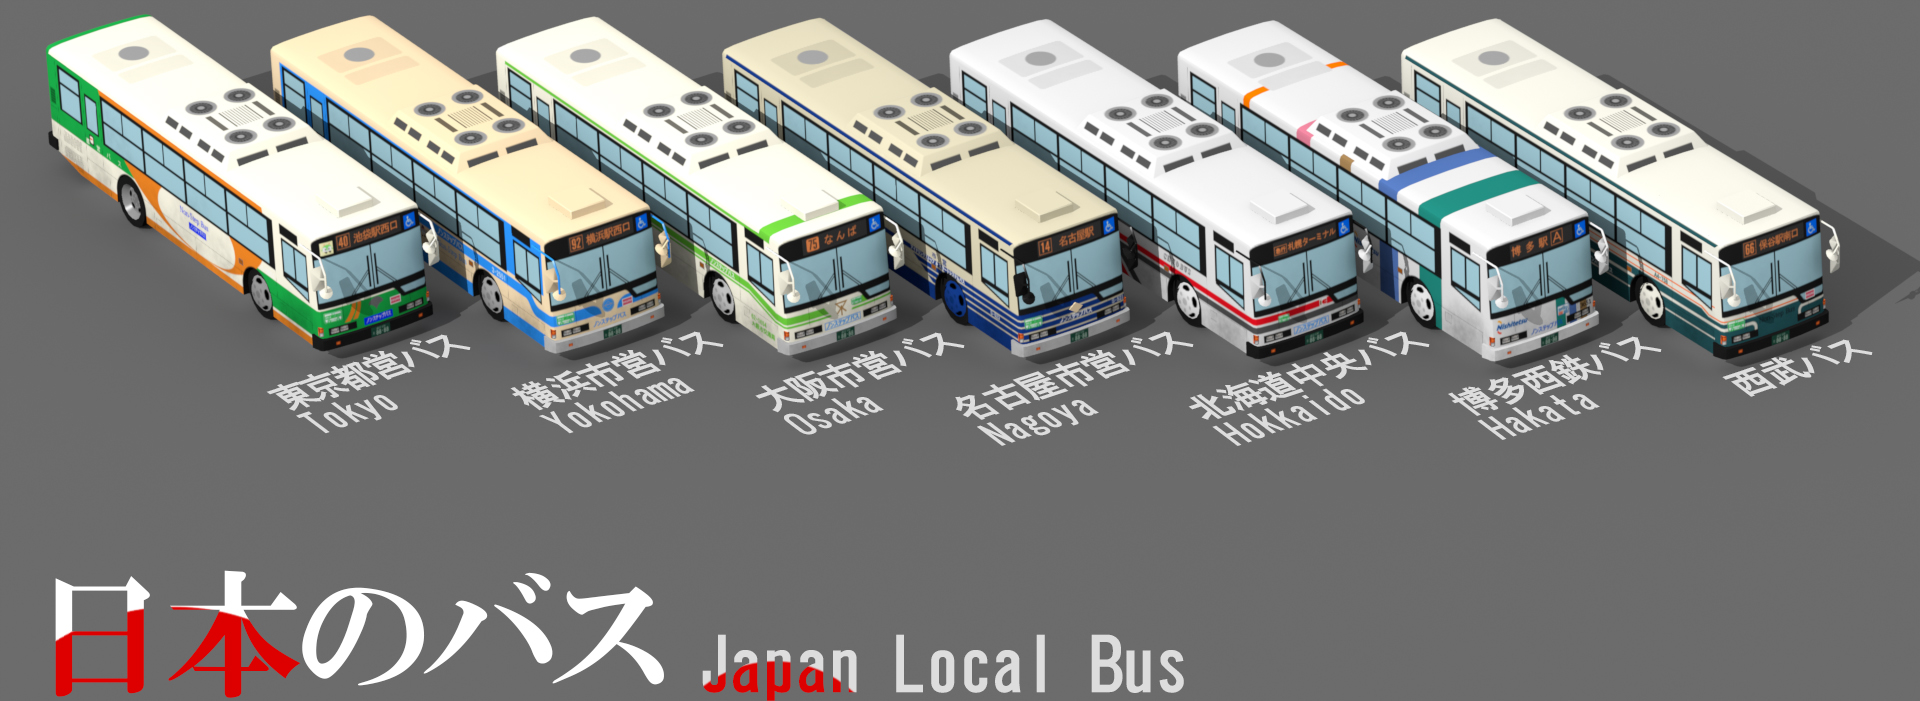 Hokkaido Chuou Bus 北海道中央バス Cities Skylines Mod Download